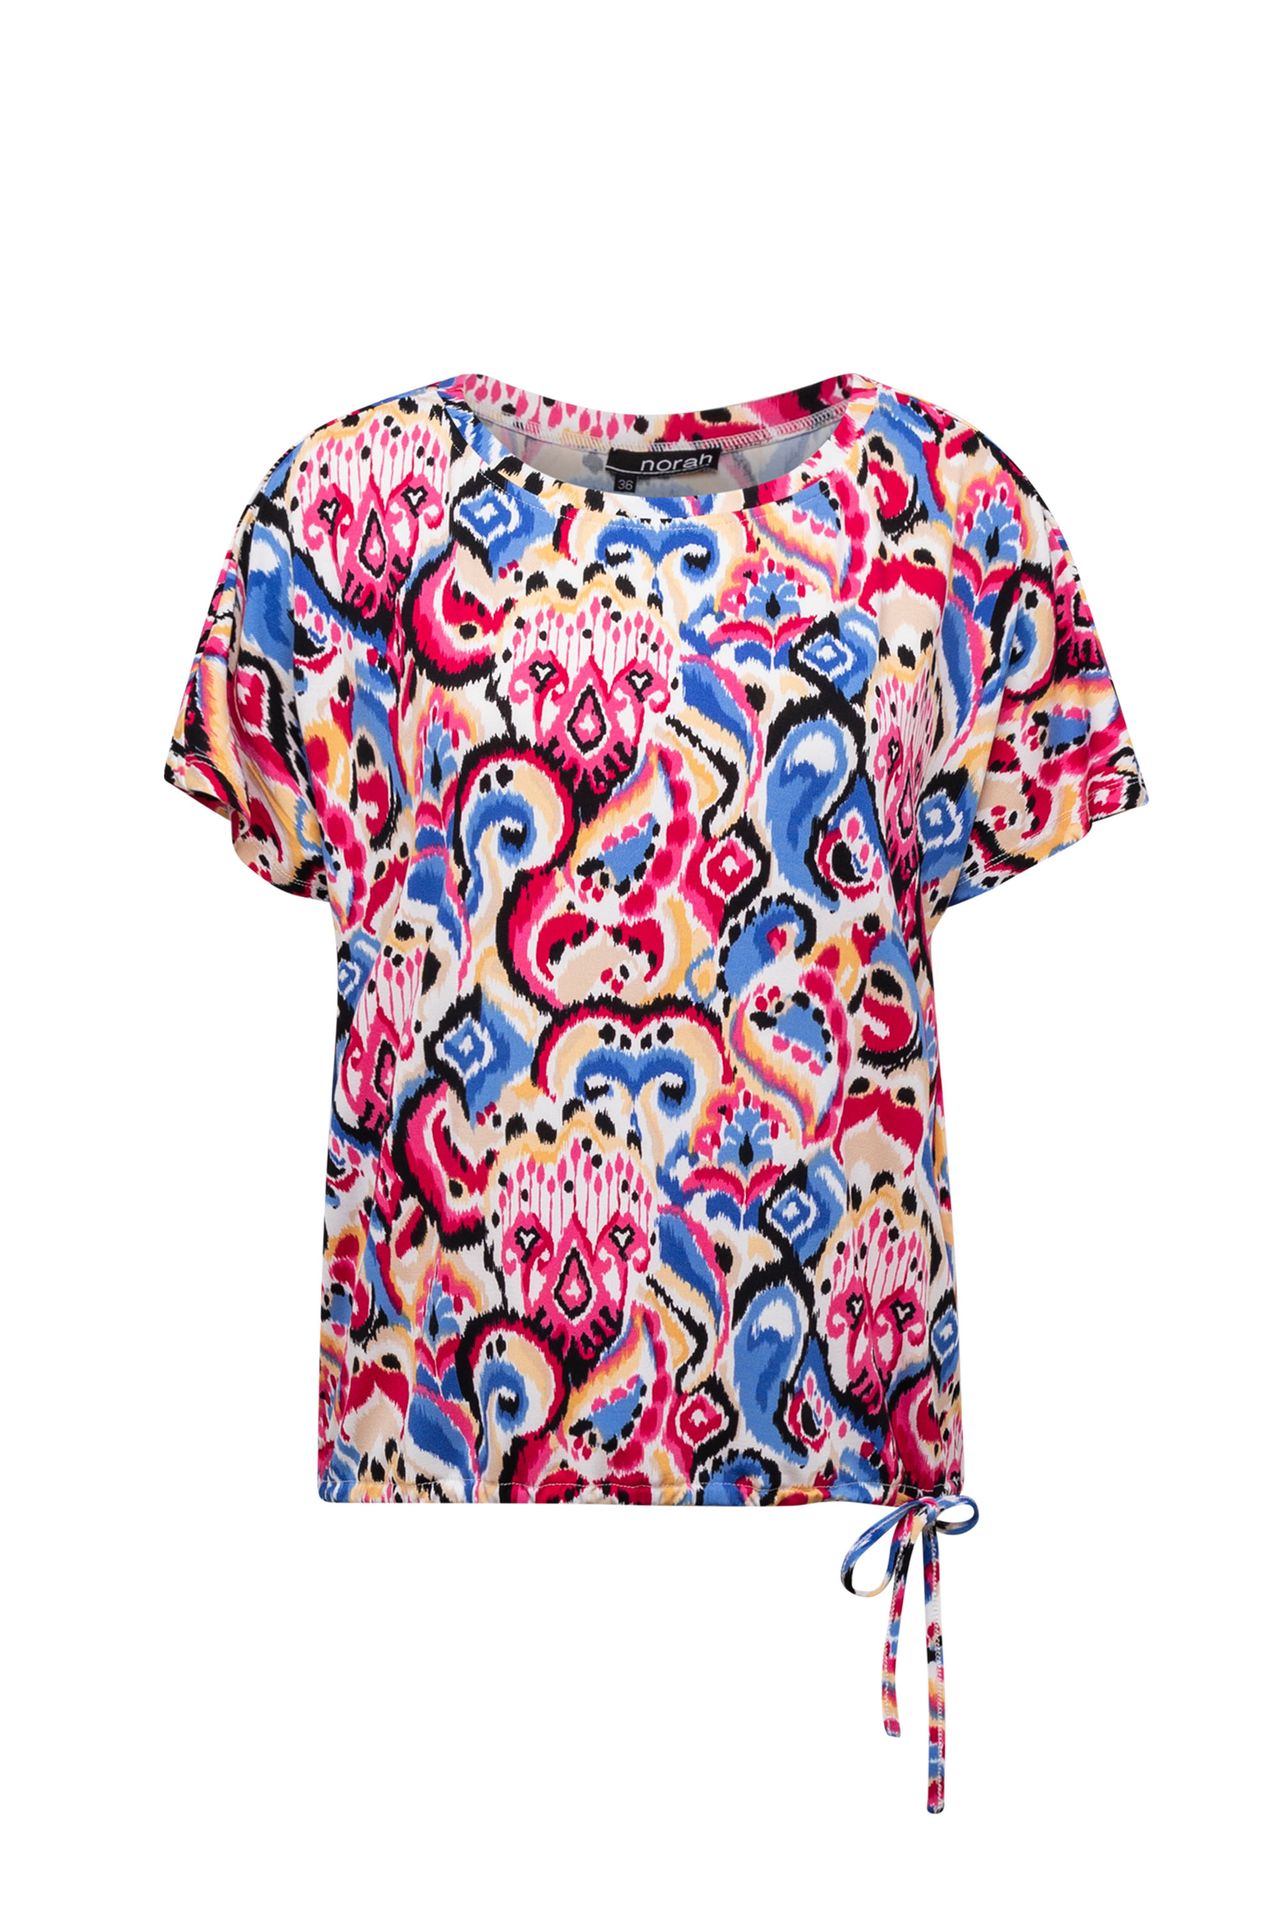 Norah Meerkleurig shirt pink multicolor 212784-920